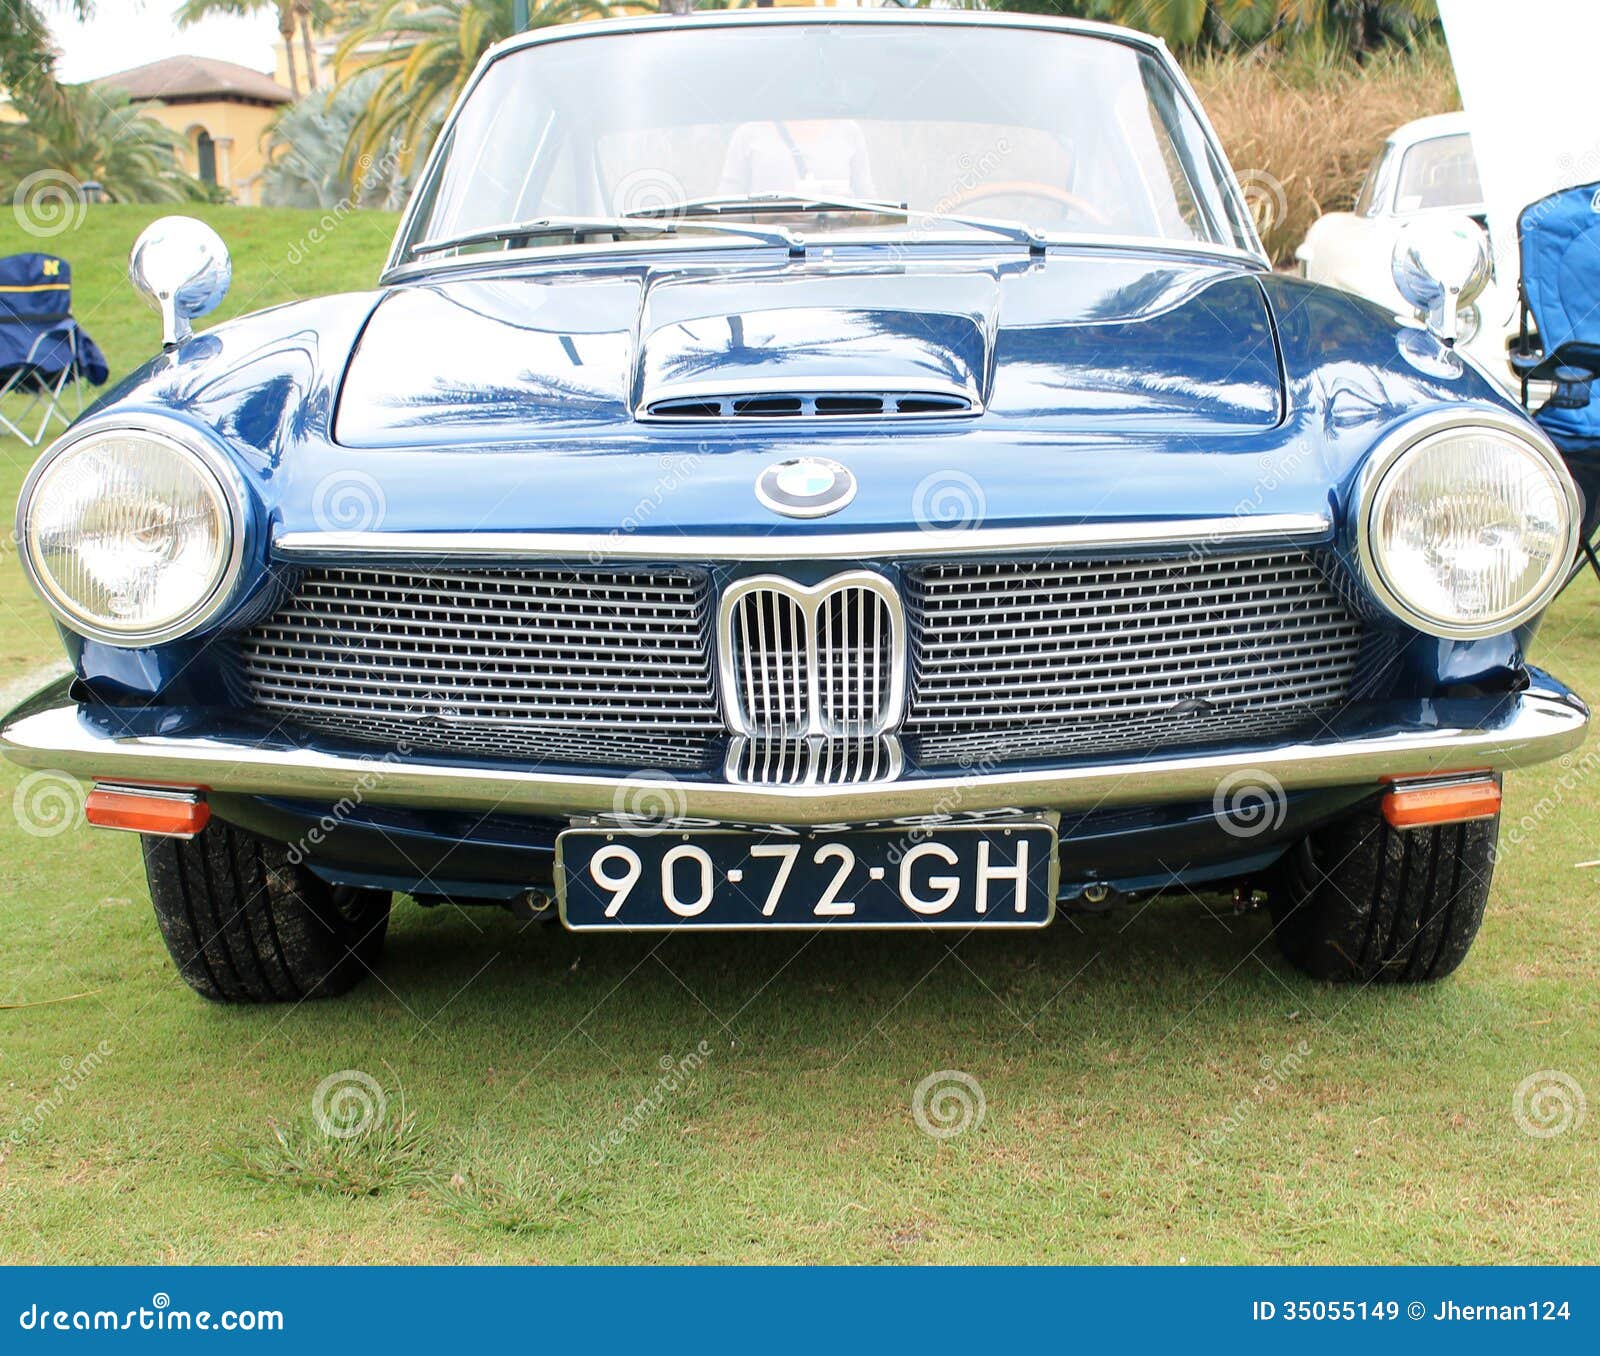 Vintage blue german sports car close up front view. 1967 bmw 1600 gt 